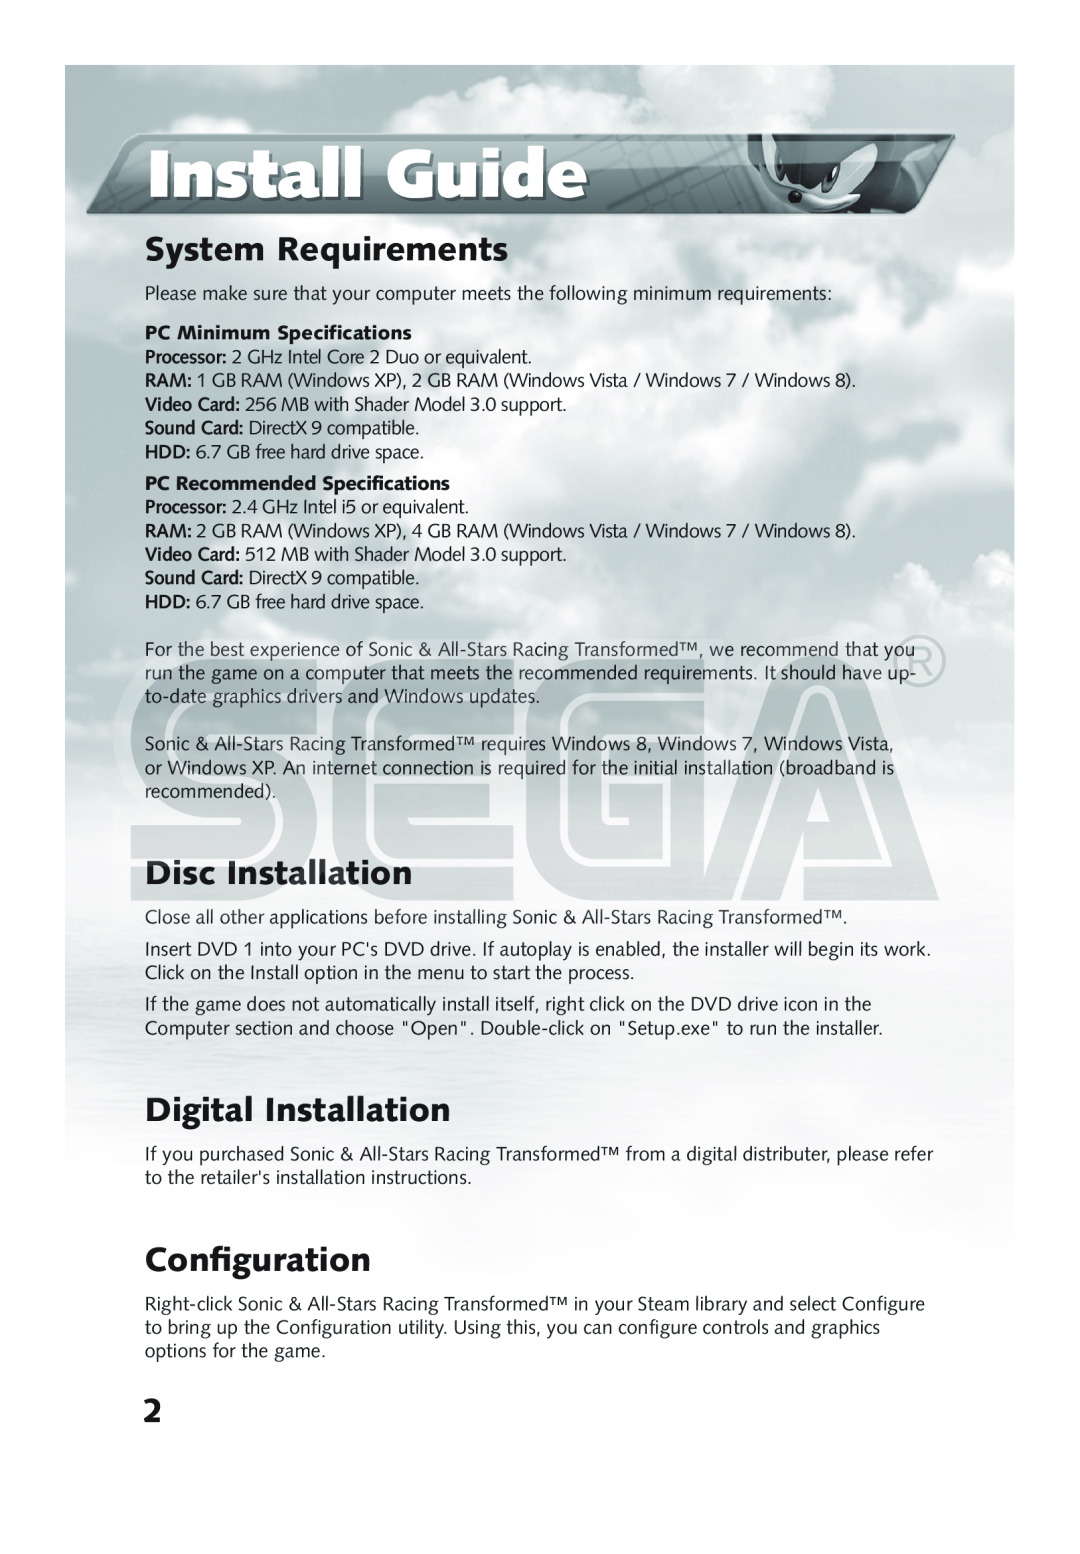 Sega 10086671018, 10086690644 Install Guide, System Requirements, Disc Installation, Digital Installation, Conﬁguration 